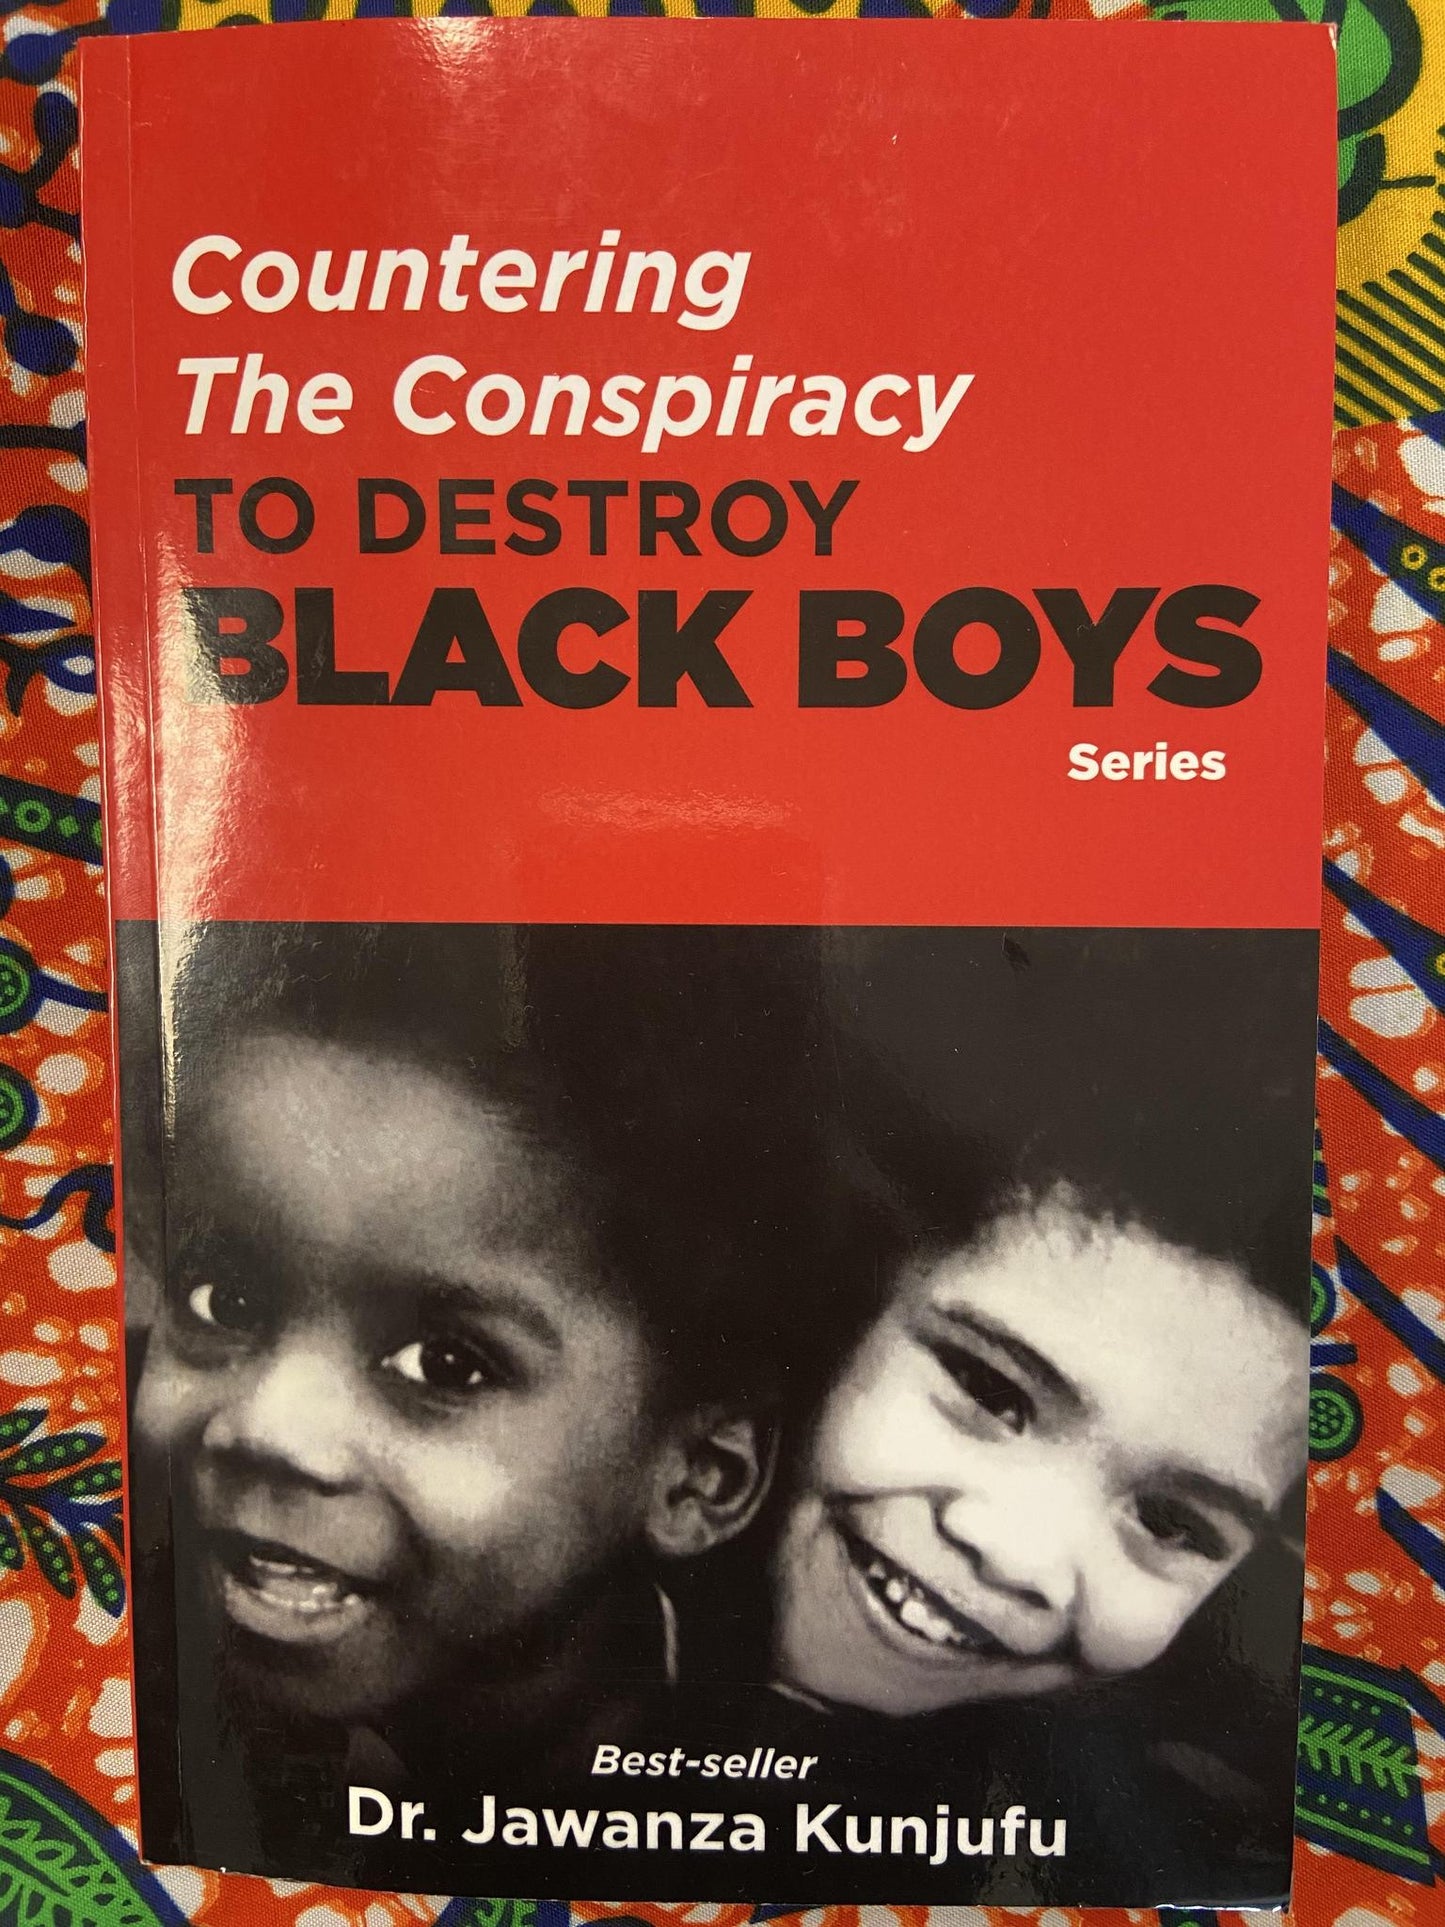 "Countering the Conspiracy to Destroy Black Boys" by Jawanza Kunjufu